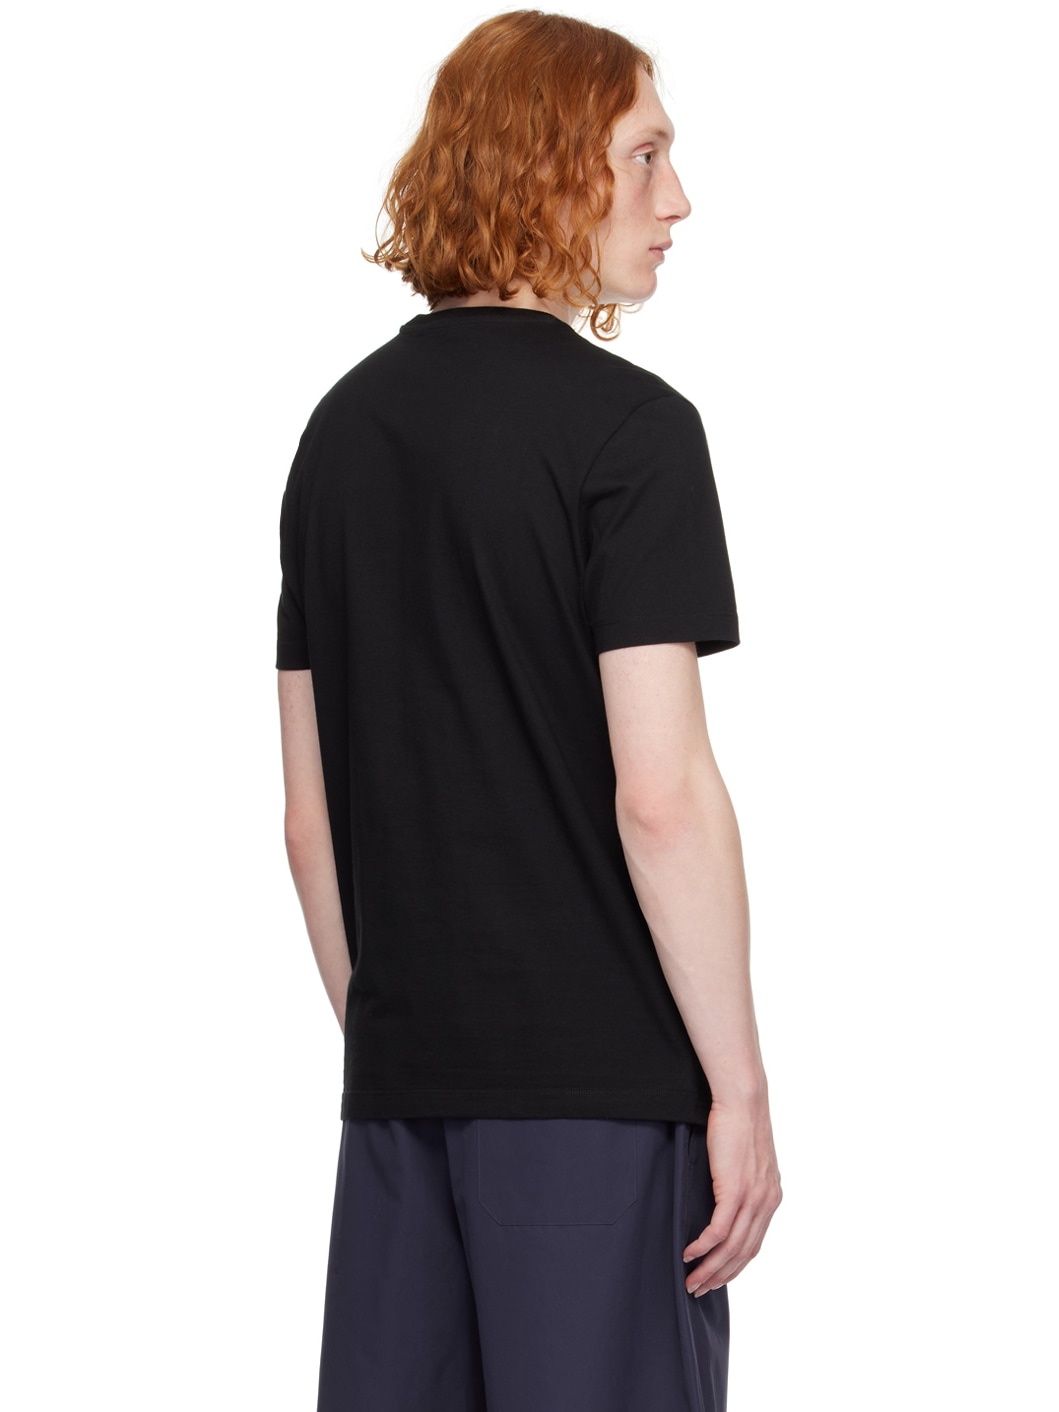 Black Medusa T-Shirt - 3